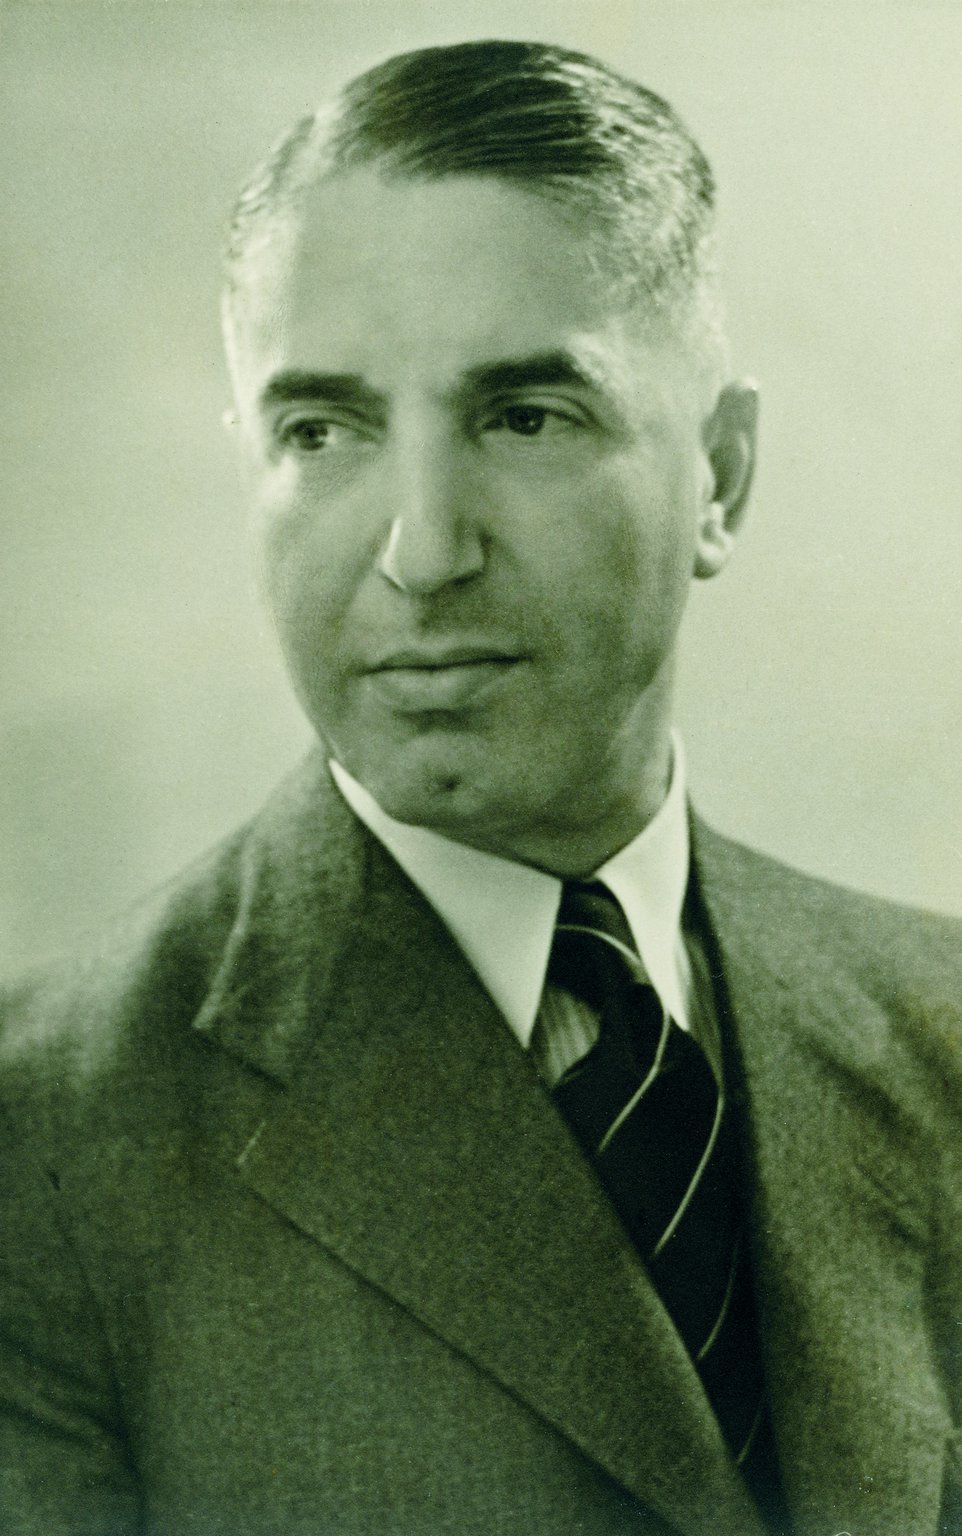 Fritz Pfeffer, around 1937.